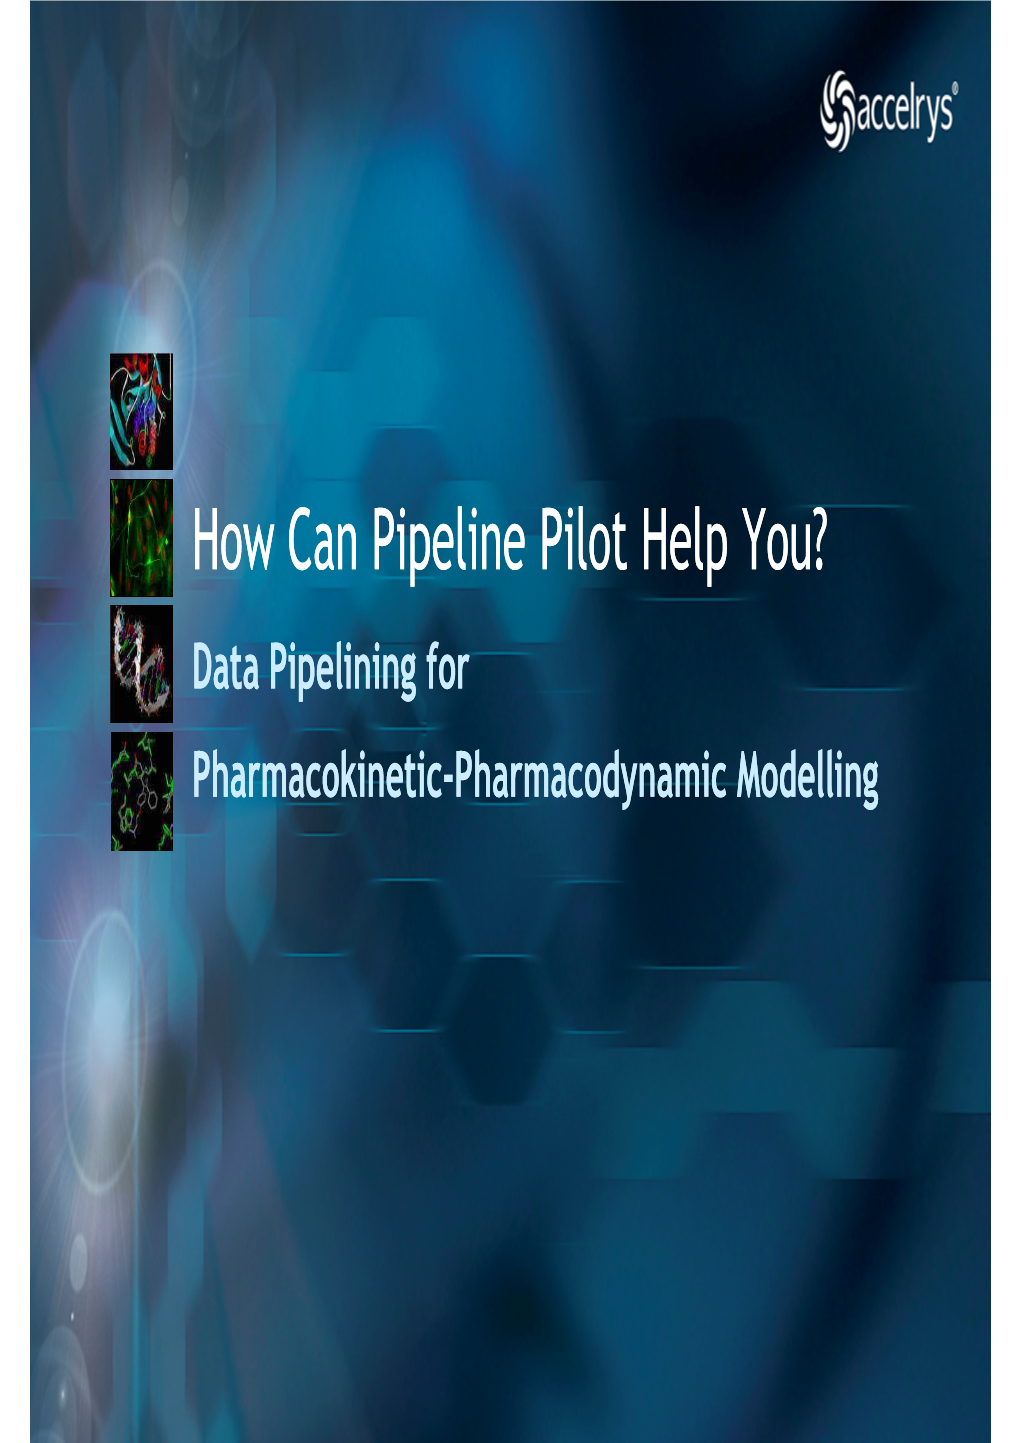 Pipeline Pilot PKPD